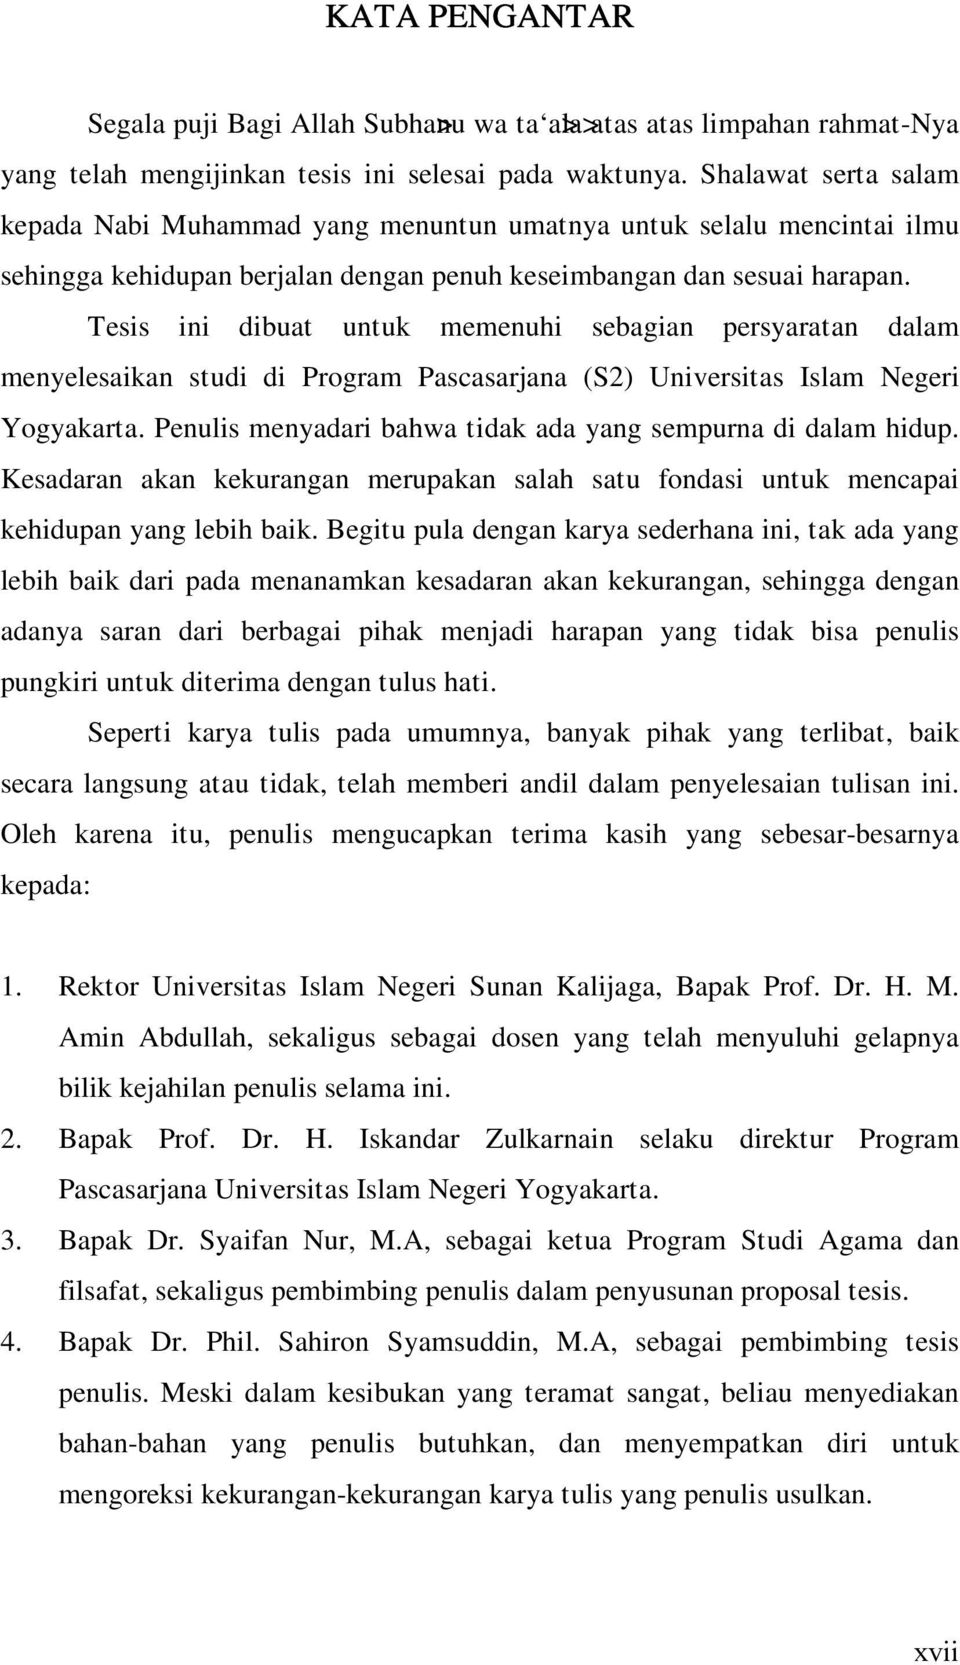 Tesis ini dibuat untuk memenuhi sebagian persyaratan dalam menyelesaikan studi di Program Pascasarjana (S2) Universitas Islam Negeri Yogyakarta.